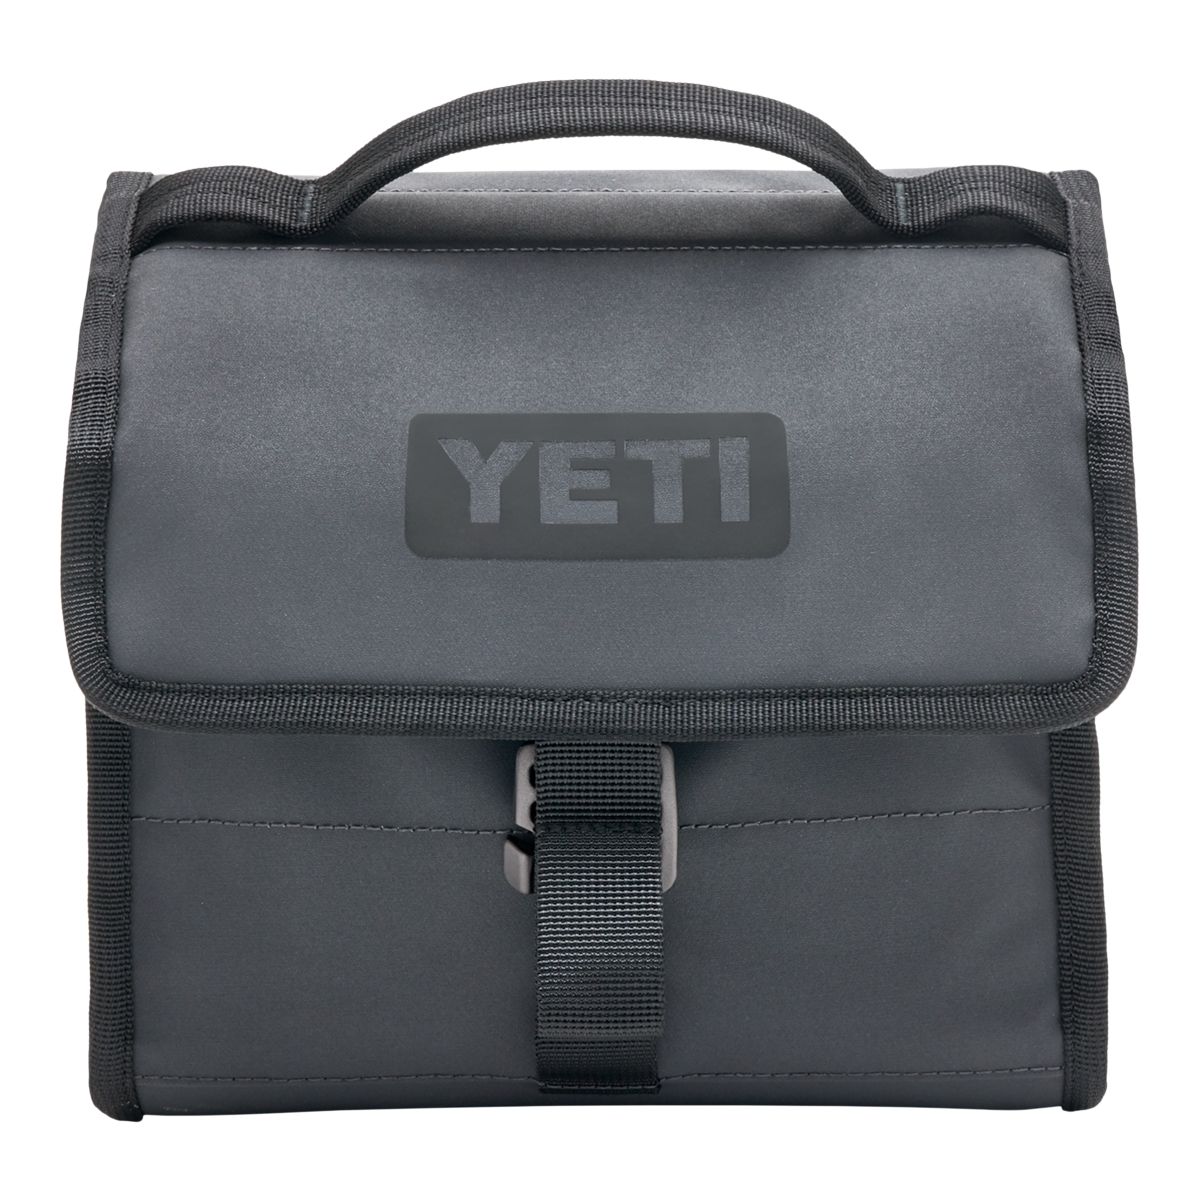 Yeti Daytrip Insulated Lunch Bag